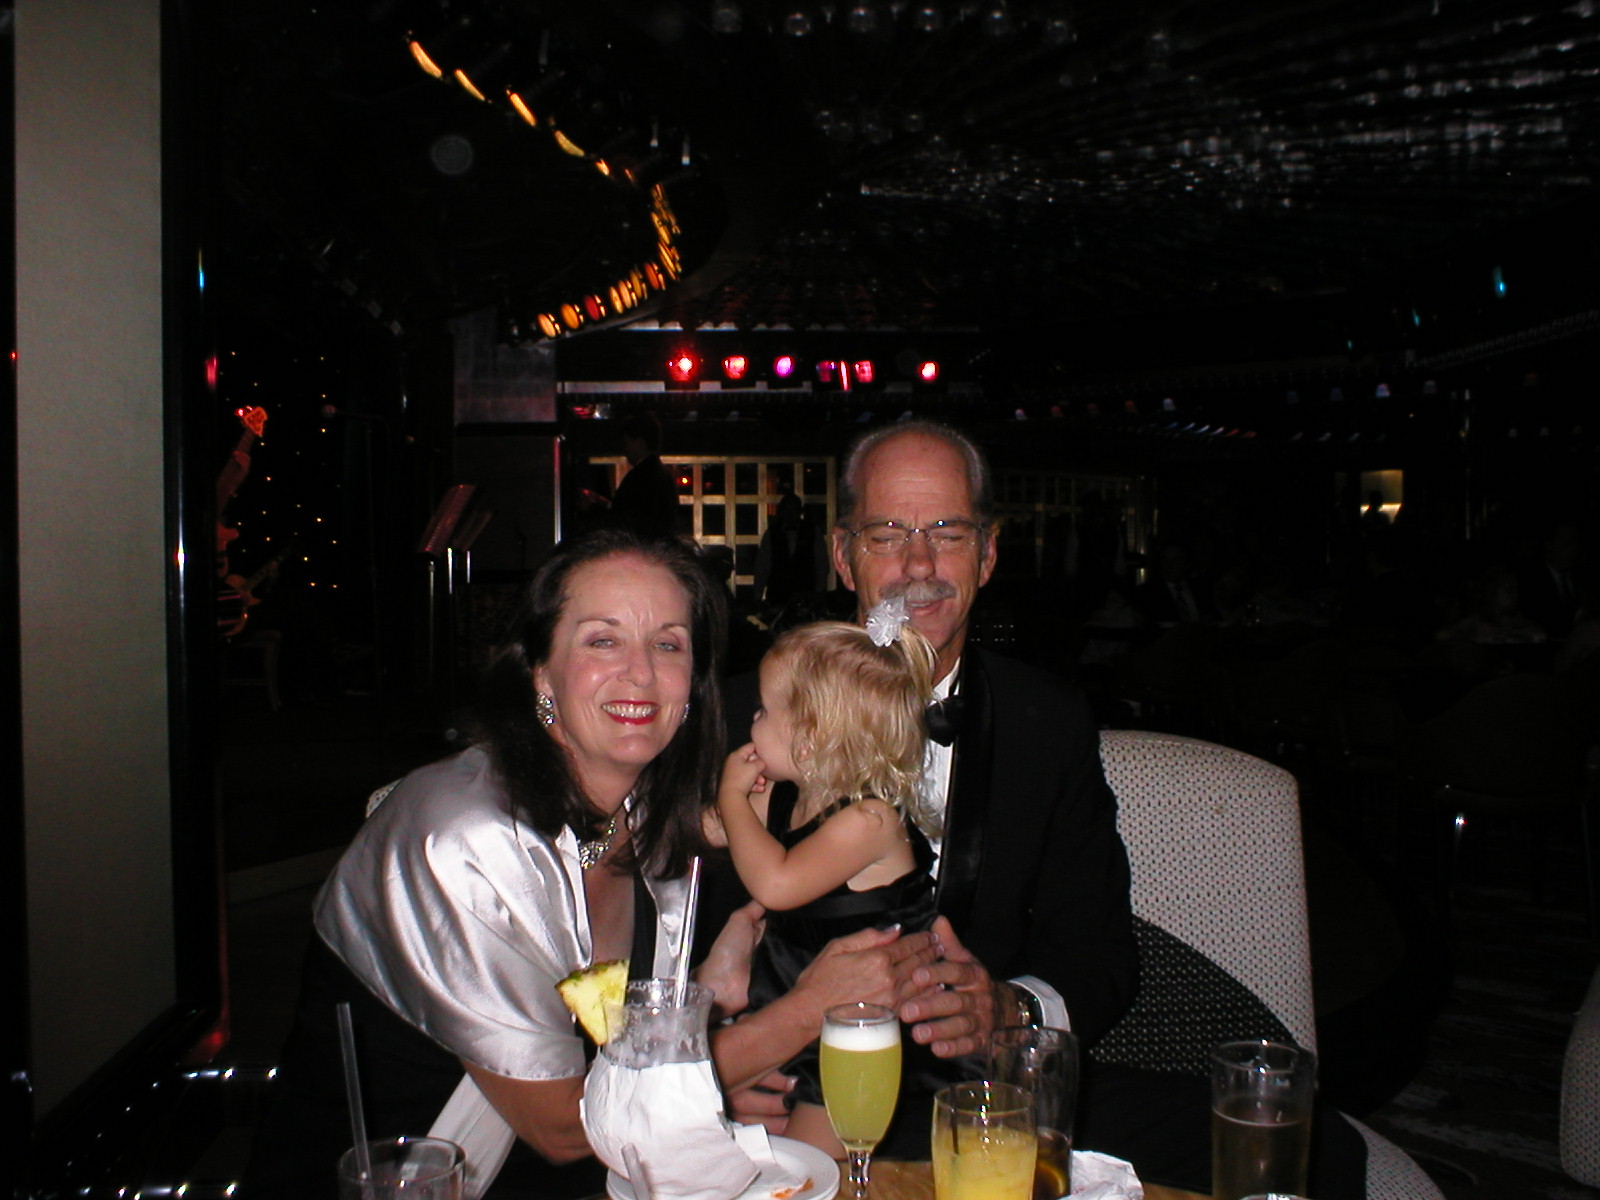 Walt & Carla & Kaylin at the Captain's Party